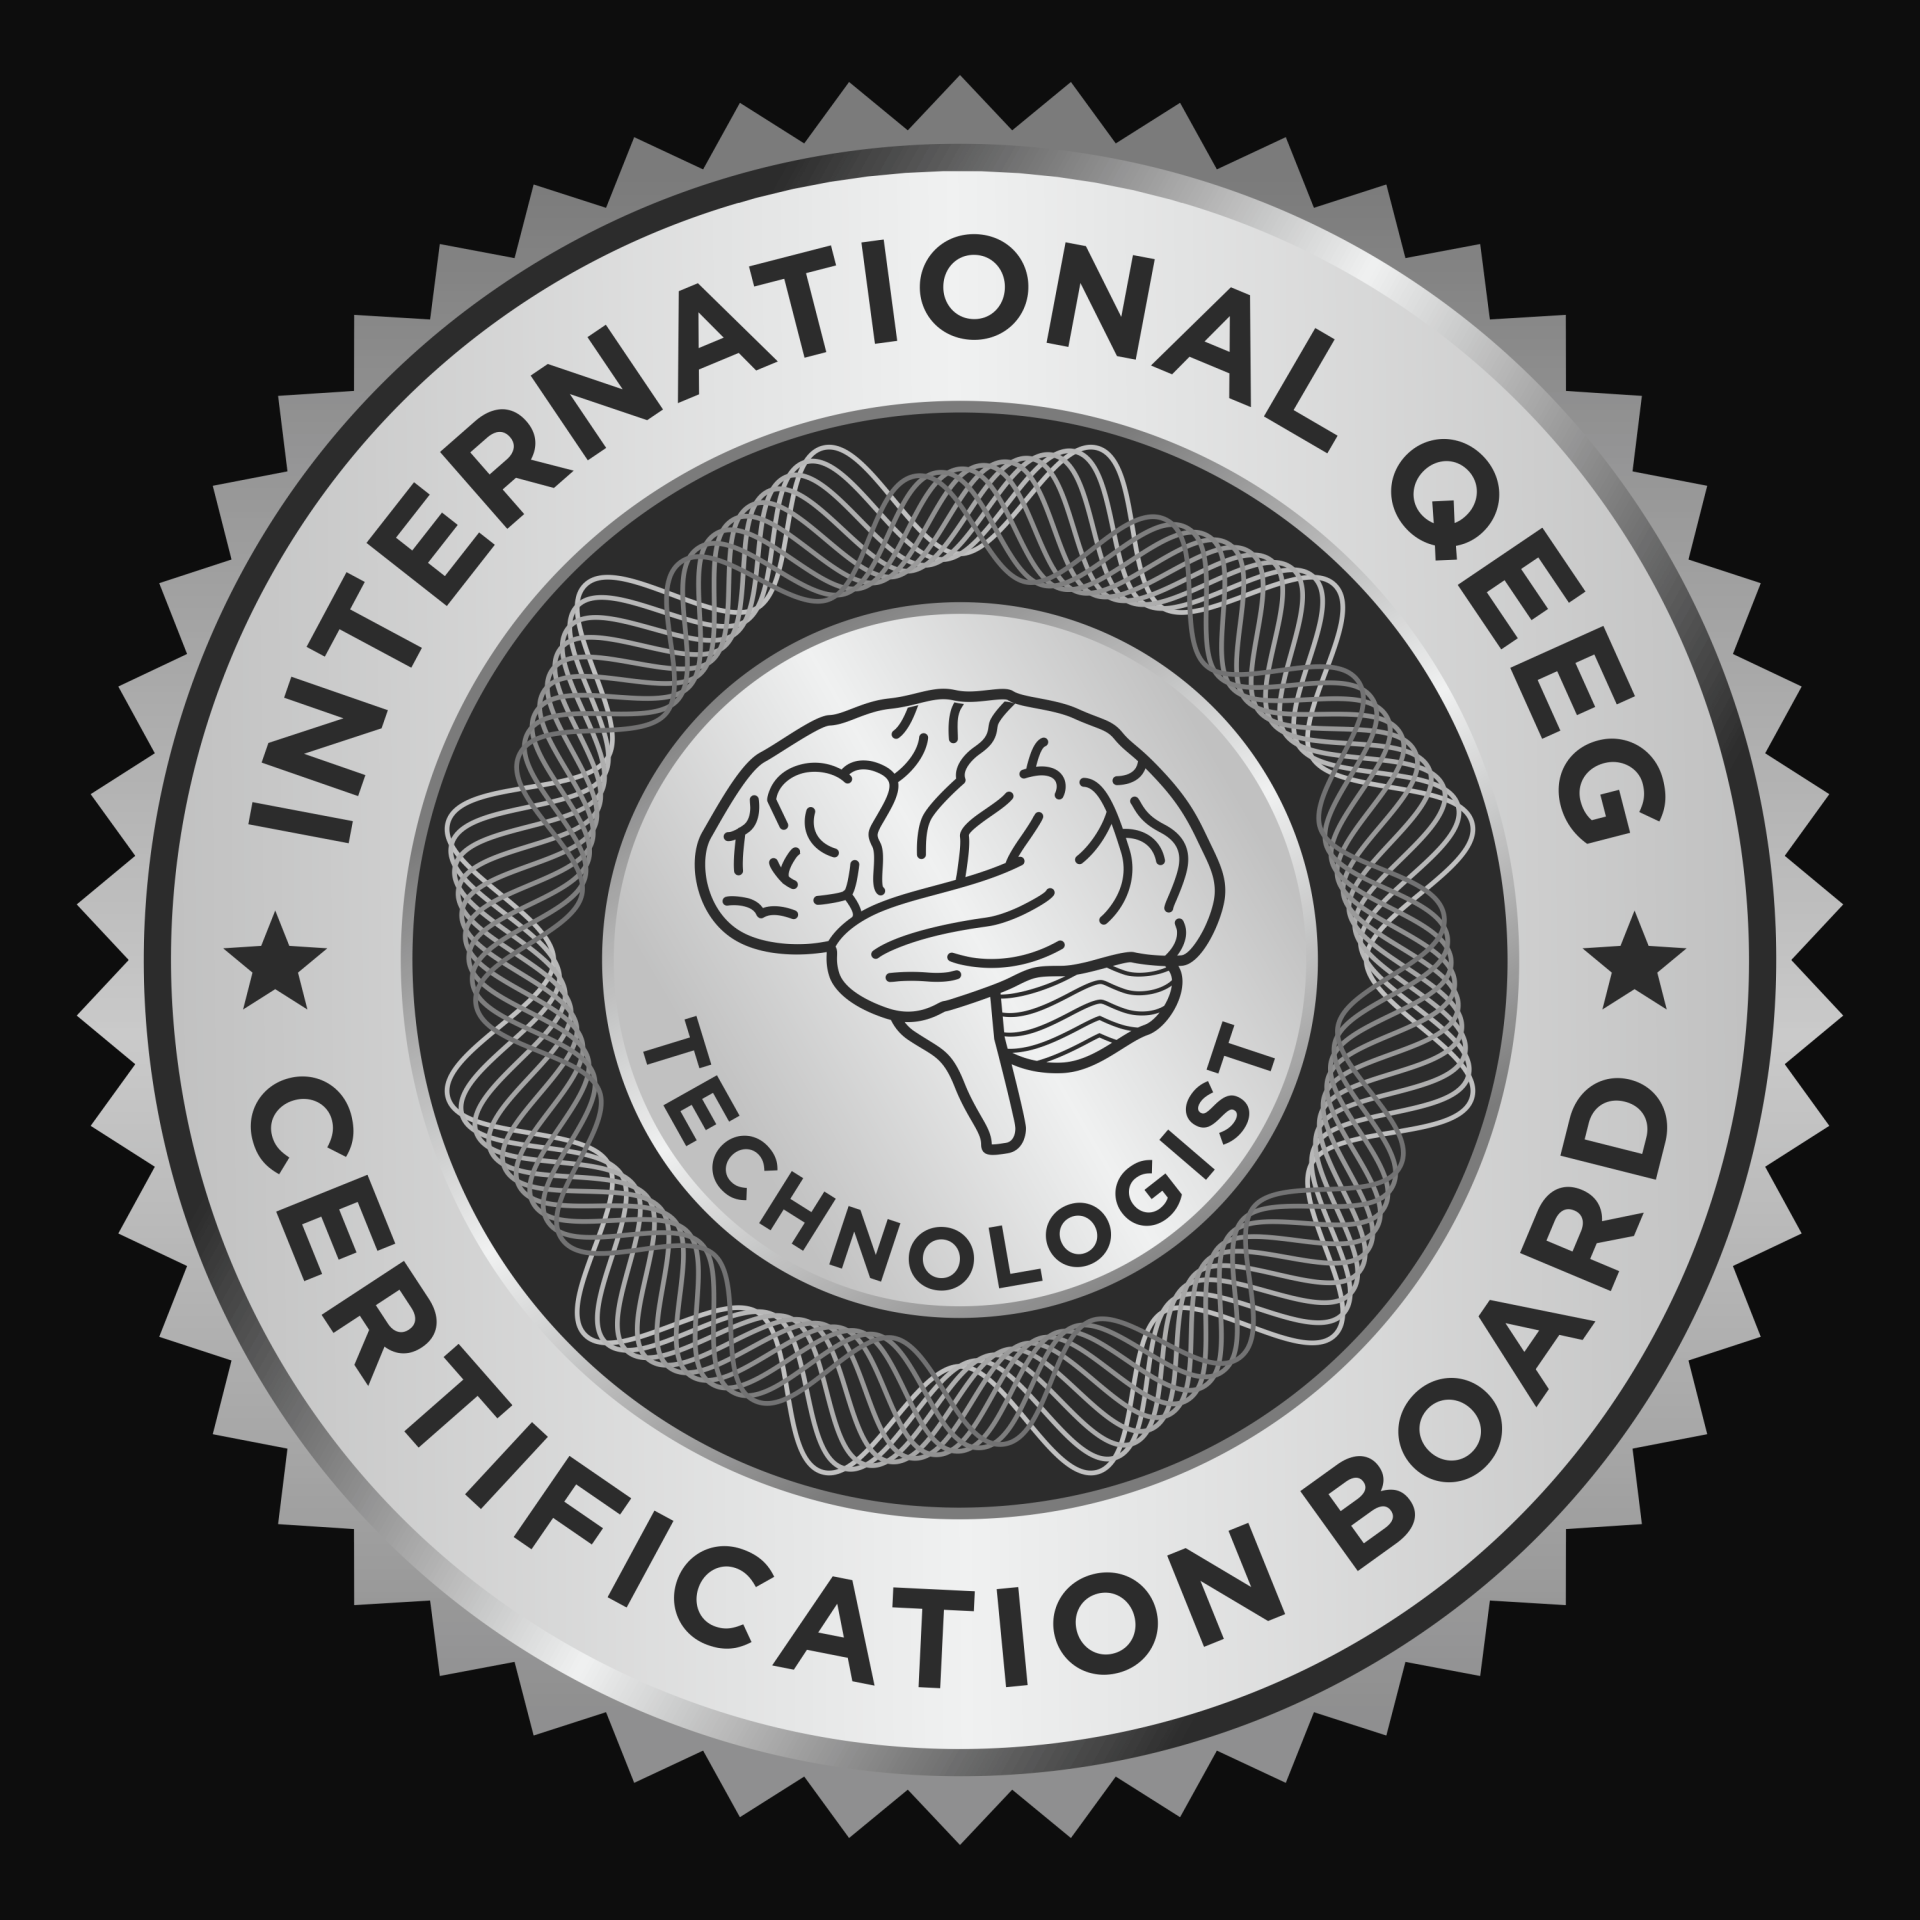 International Qeeg Certification Board